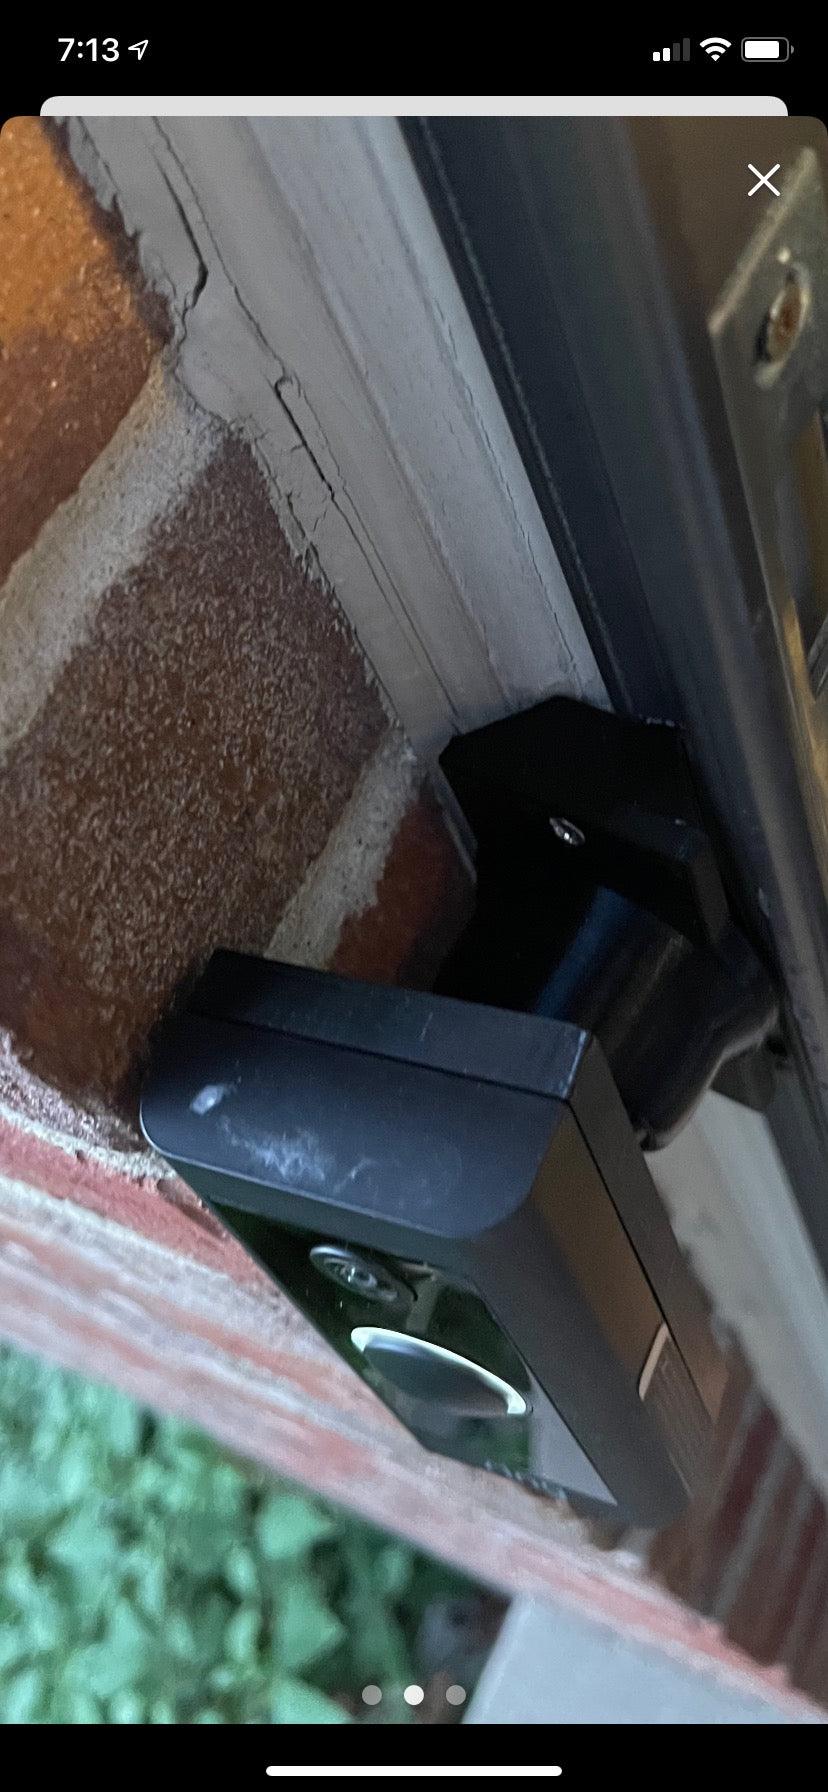 Swivel 90° Mount for Ring Wired 2021 Doorbell - Adjustable Swivel Version for Perpendicular or Side wall Doorbell Installations - DoorbellMount.Com